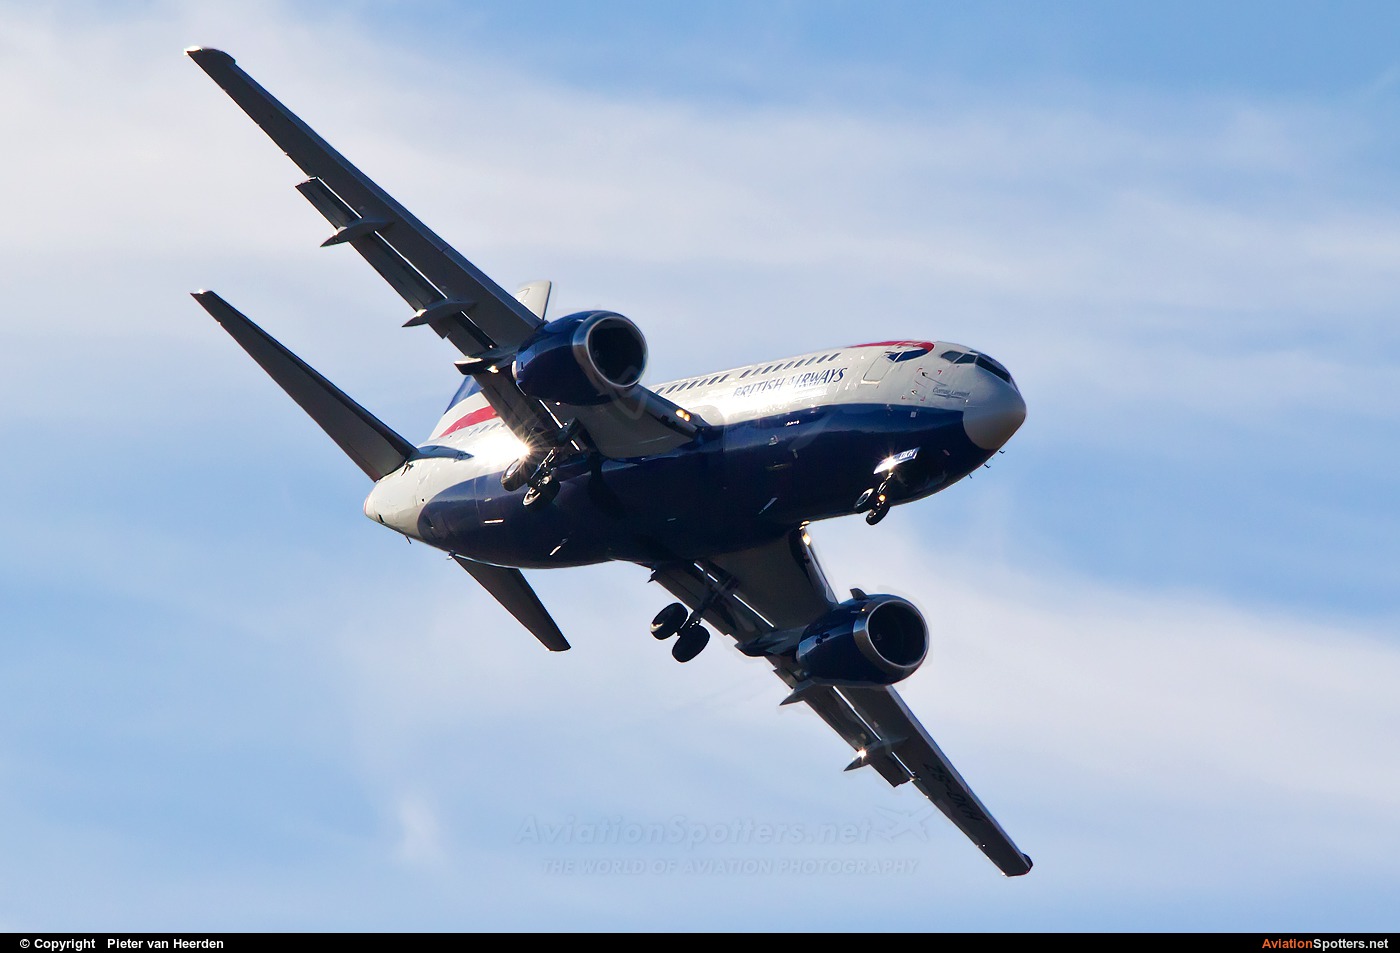 British Airways - Comair  -  737-300  (ZS-OKH) By Pieter van Heerden (pieter78)